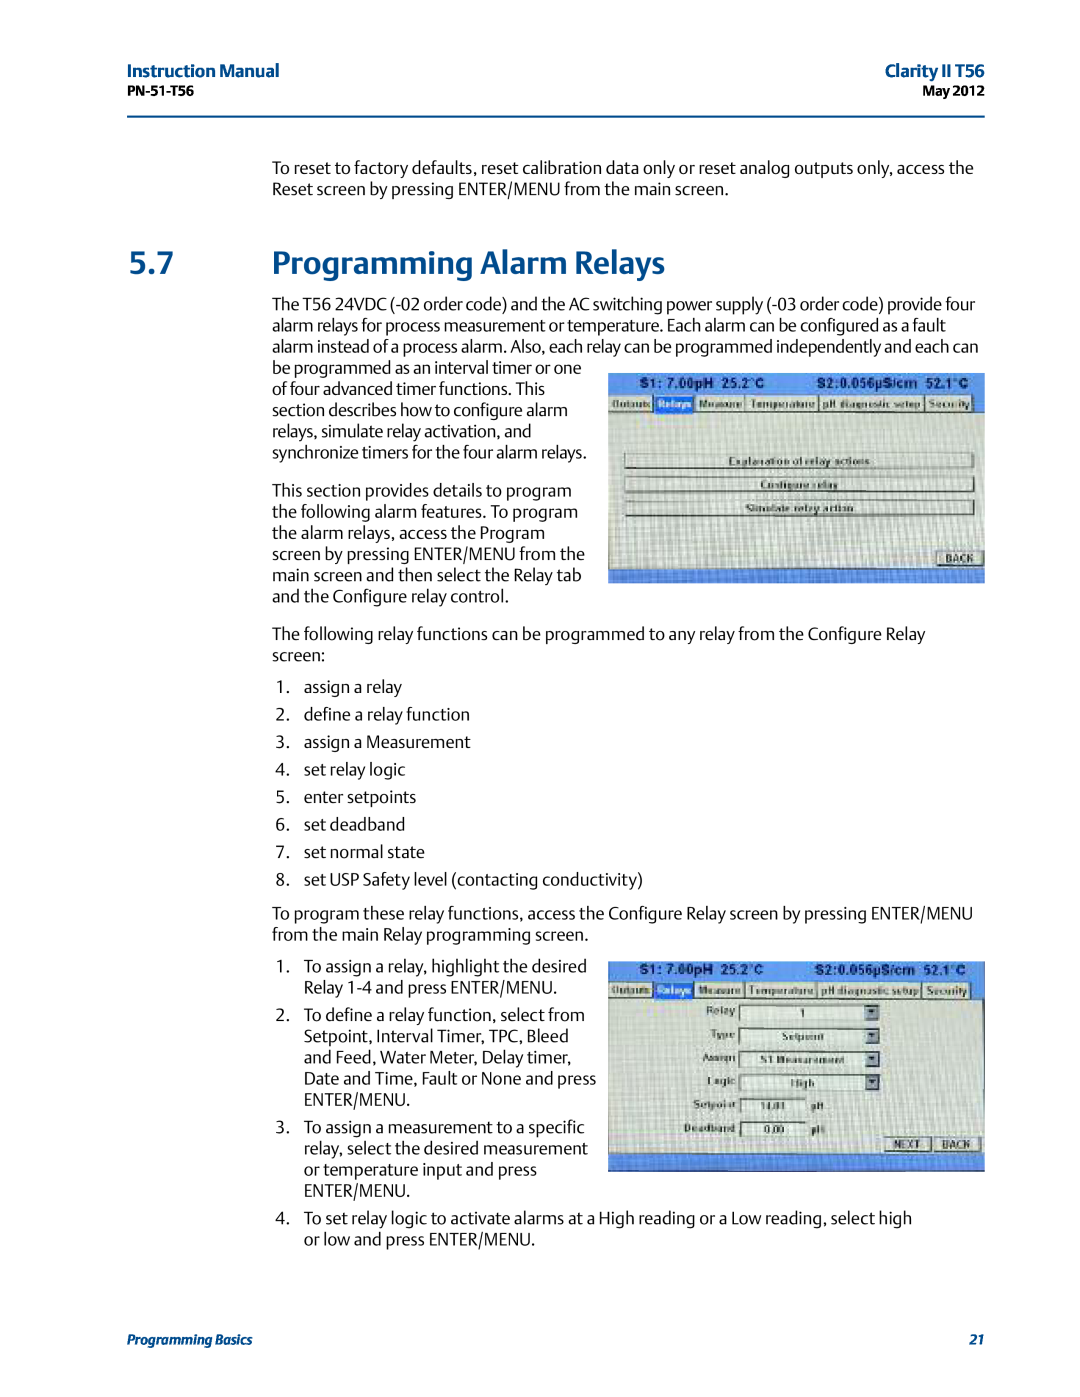 Emerson PN-51-T56 instruction manual Programming Alarm Relays 